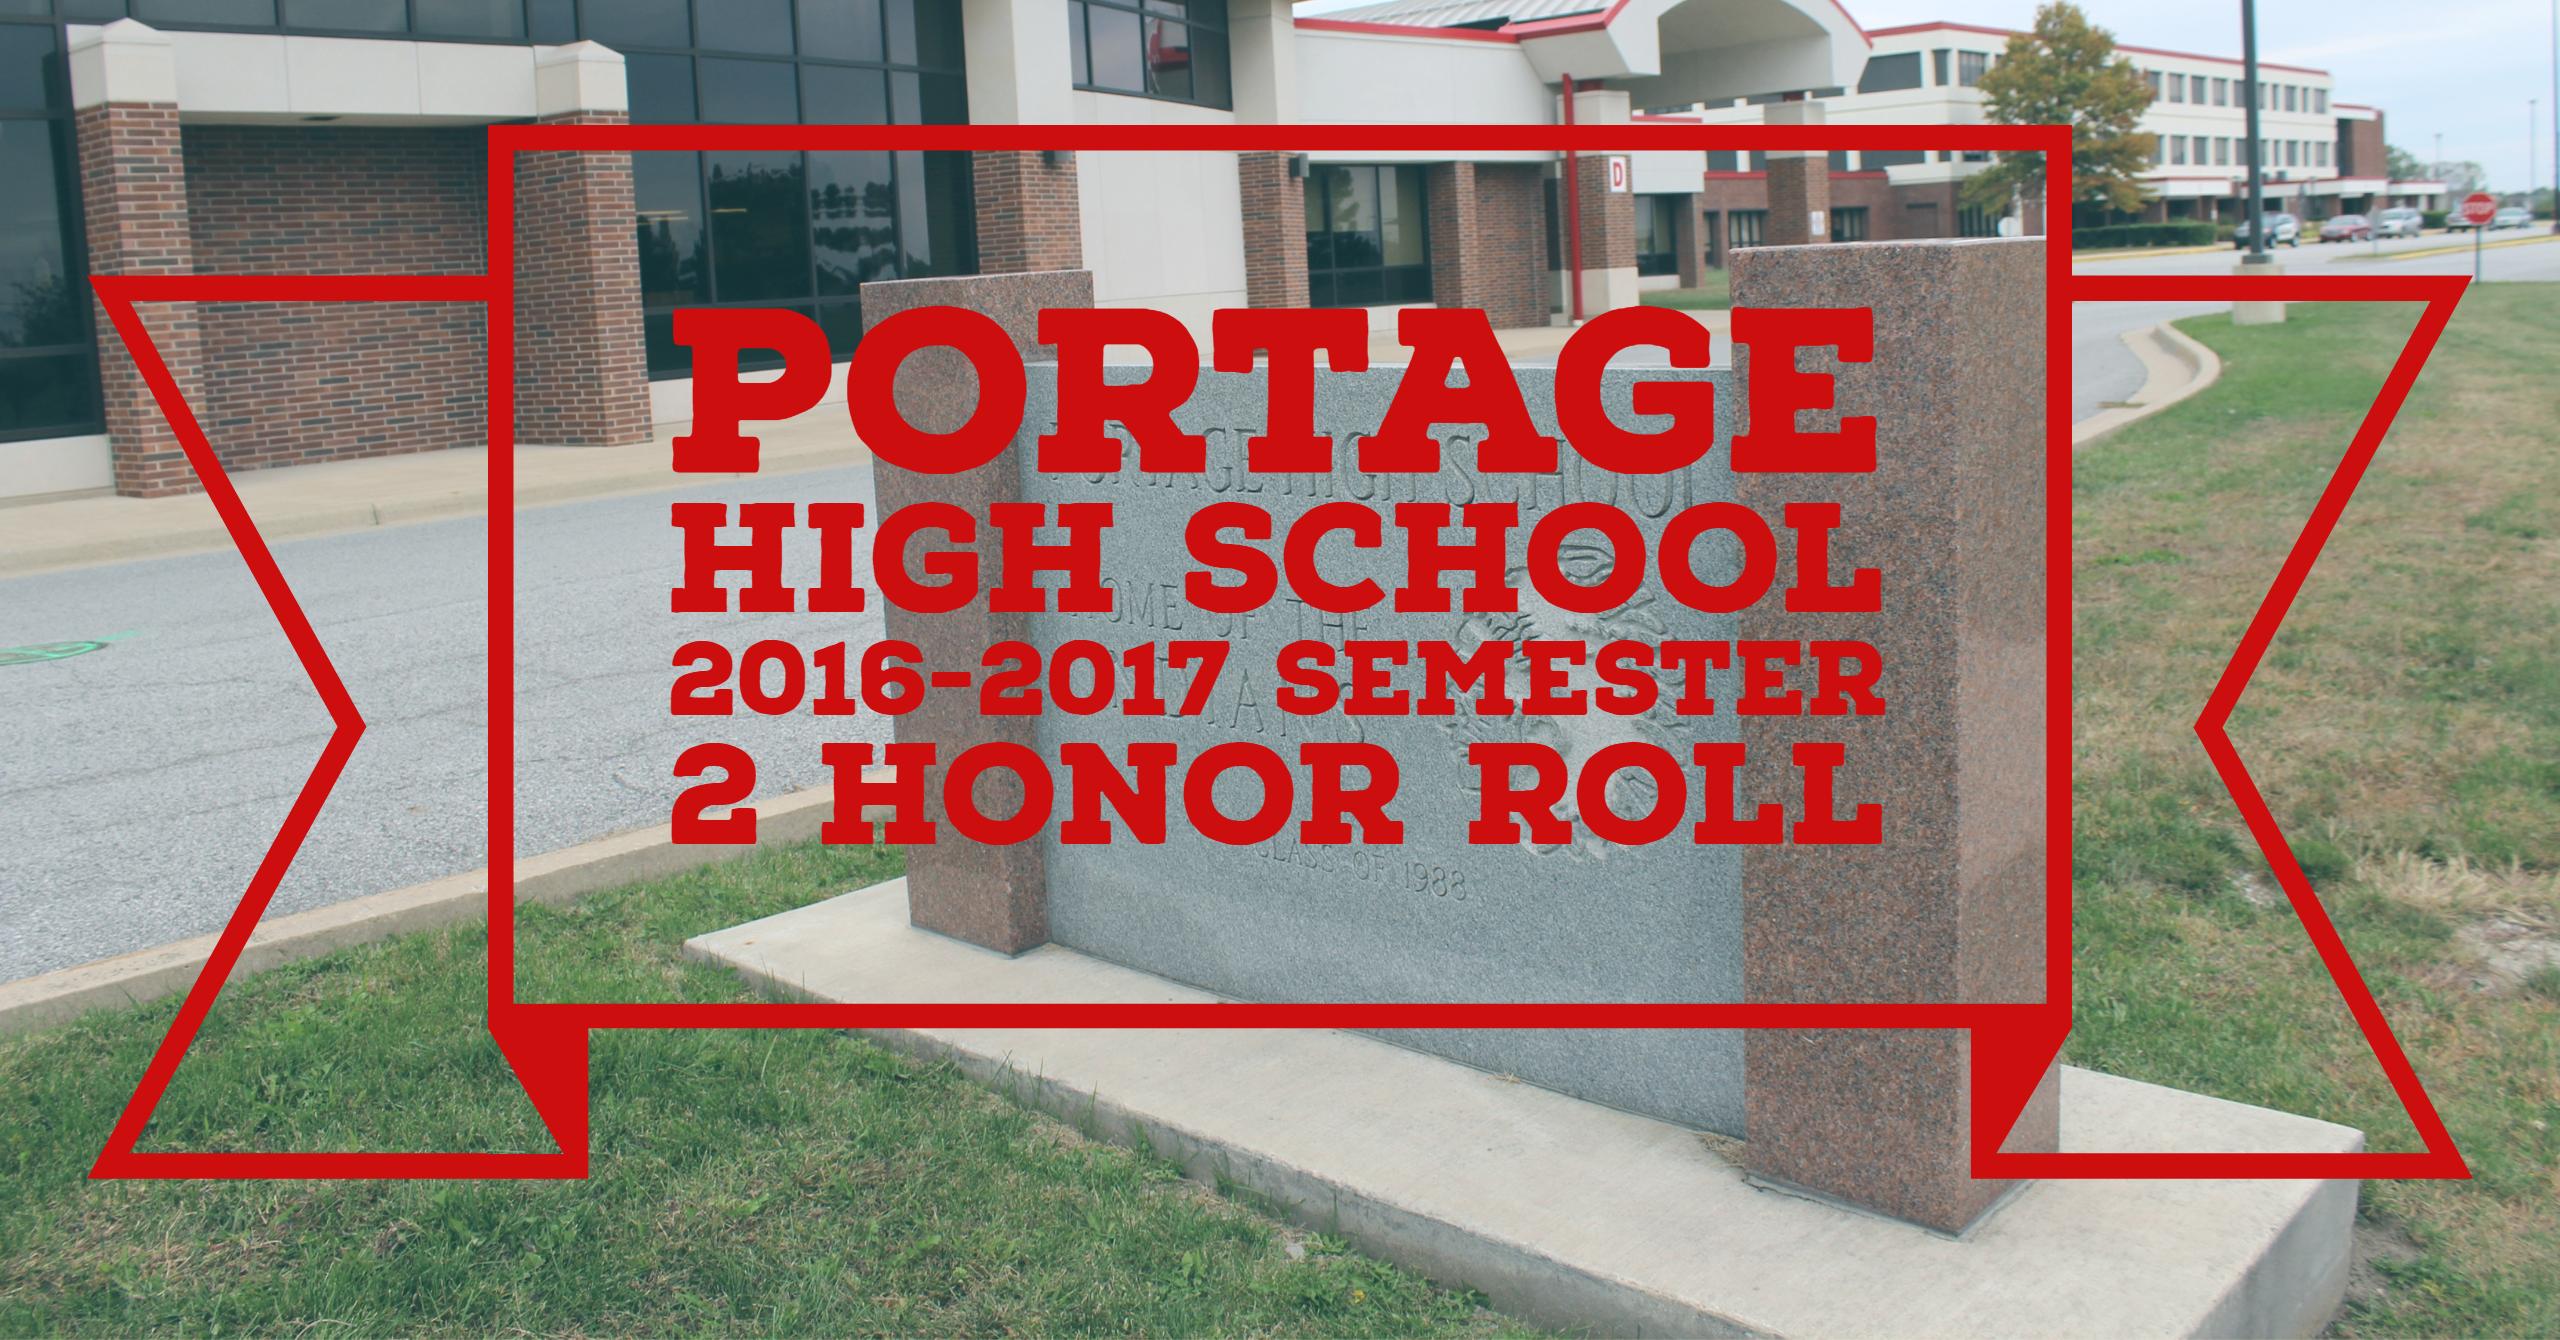 Portage High School 2016-2017 Semester 2 Honor Roll